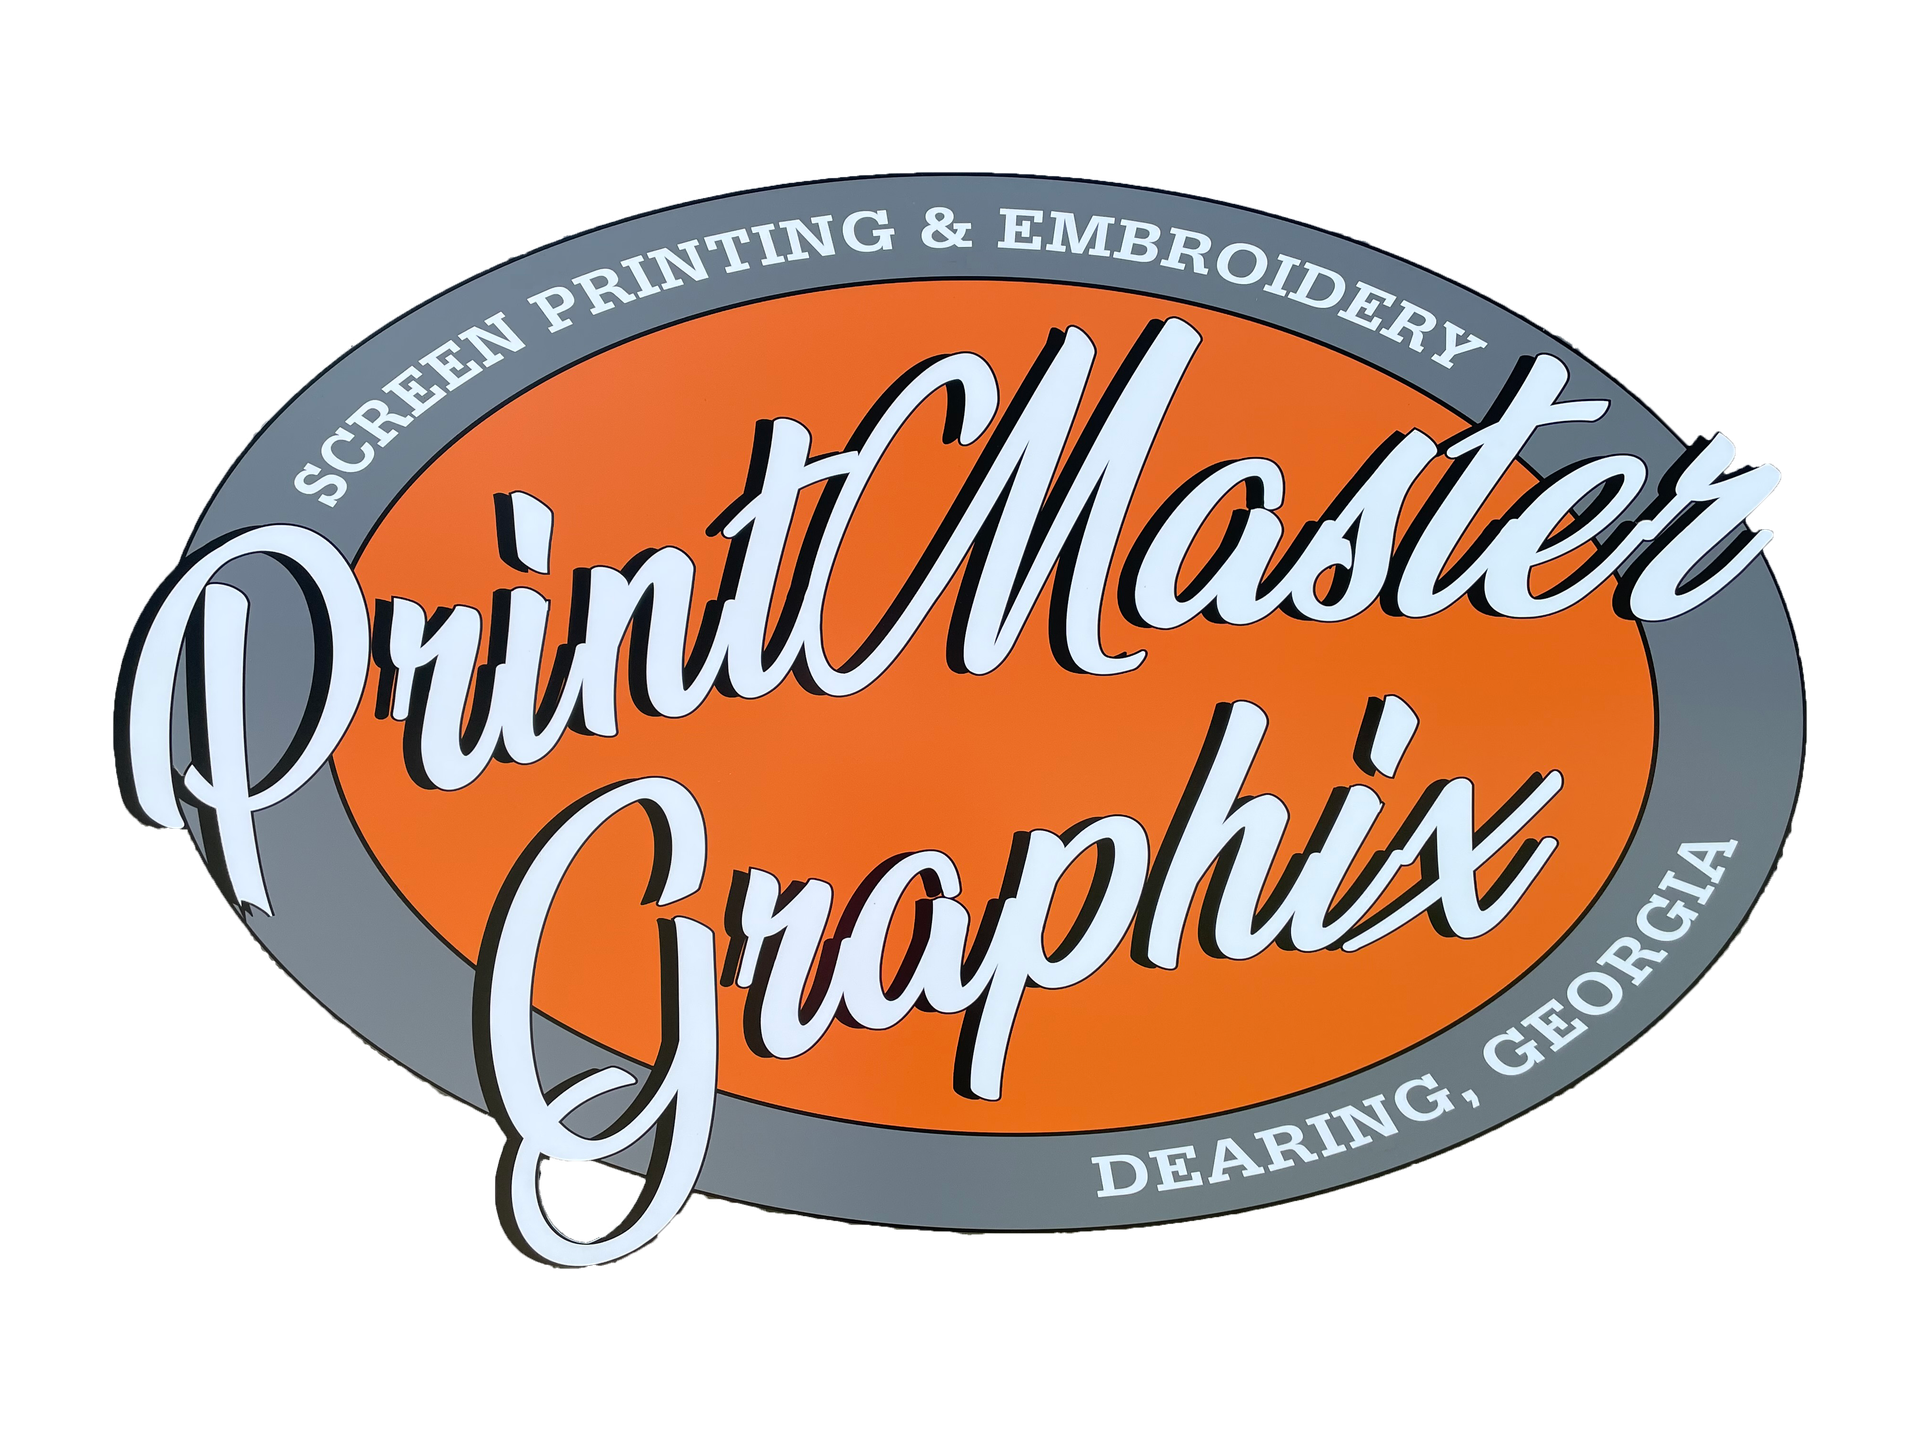 Print Master Graphix LLC